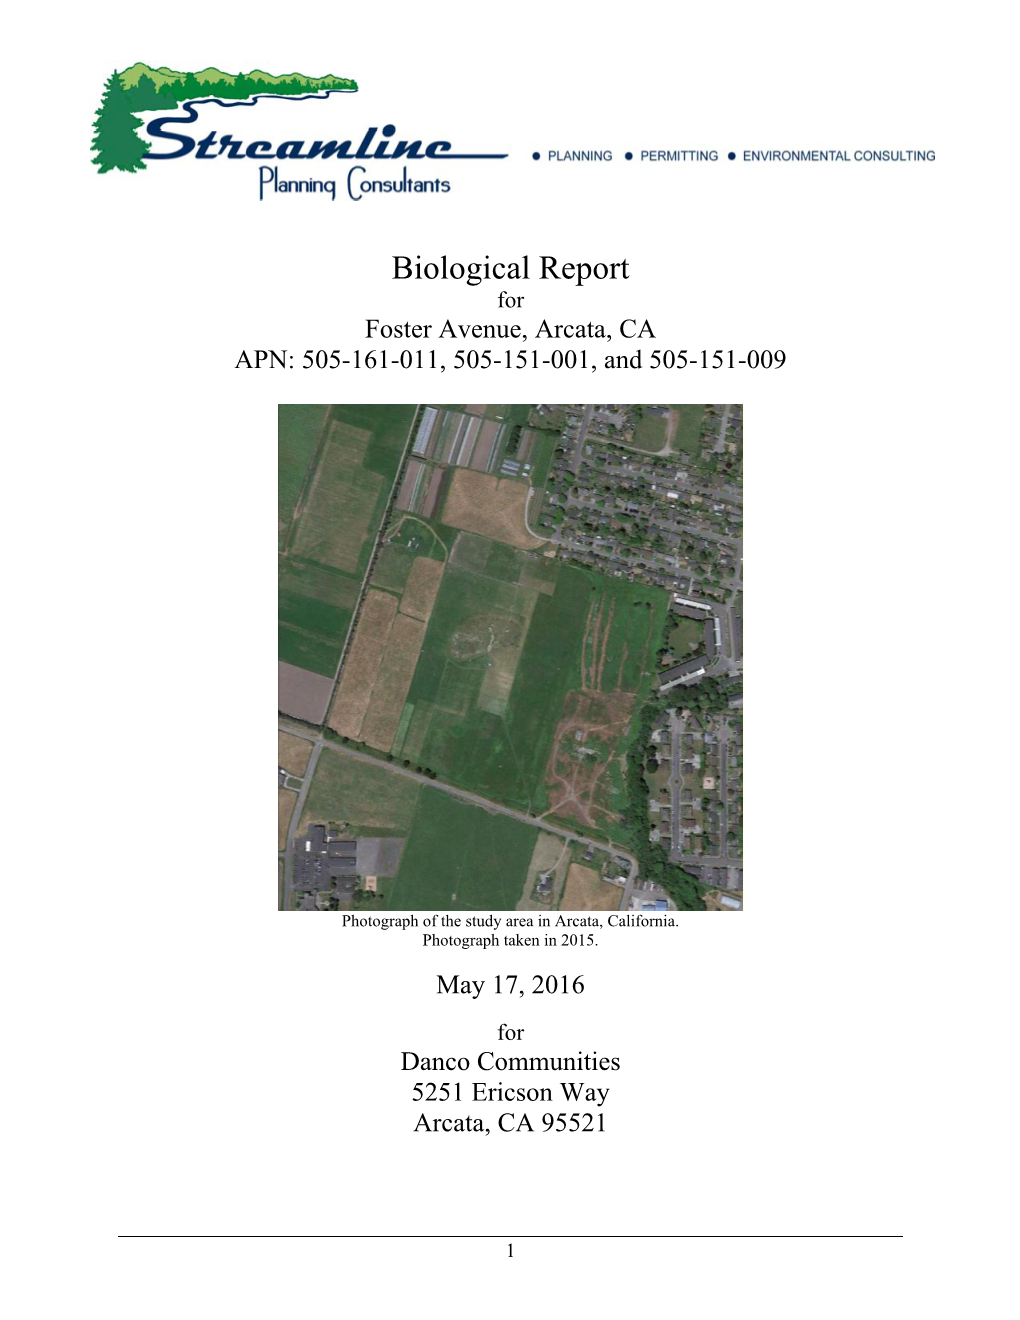 Appendix Z. Biological Report